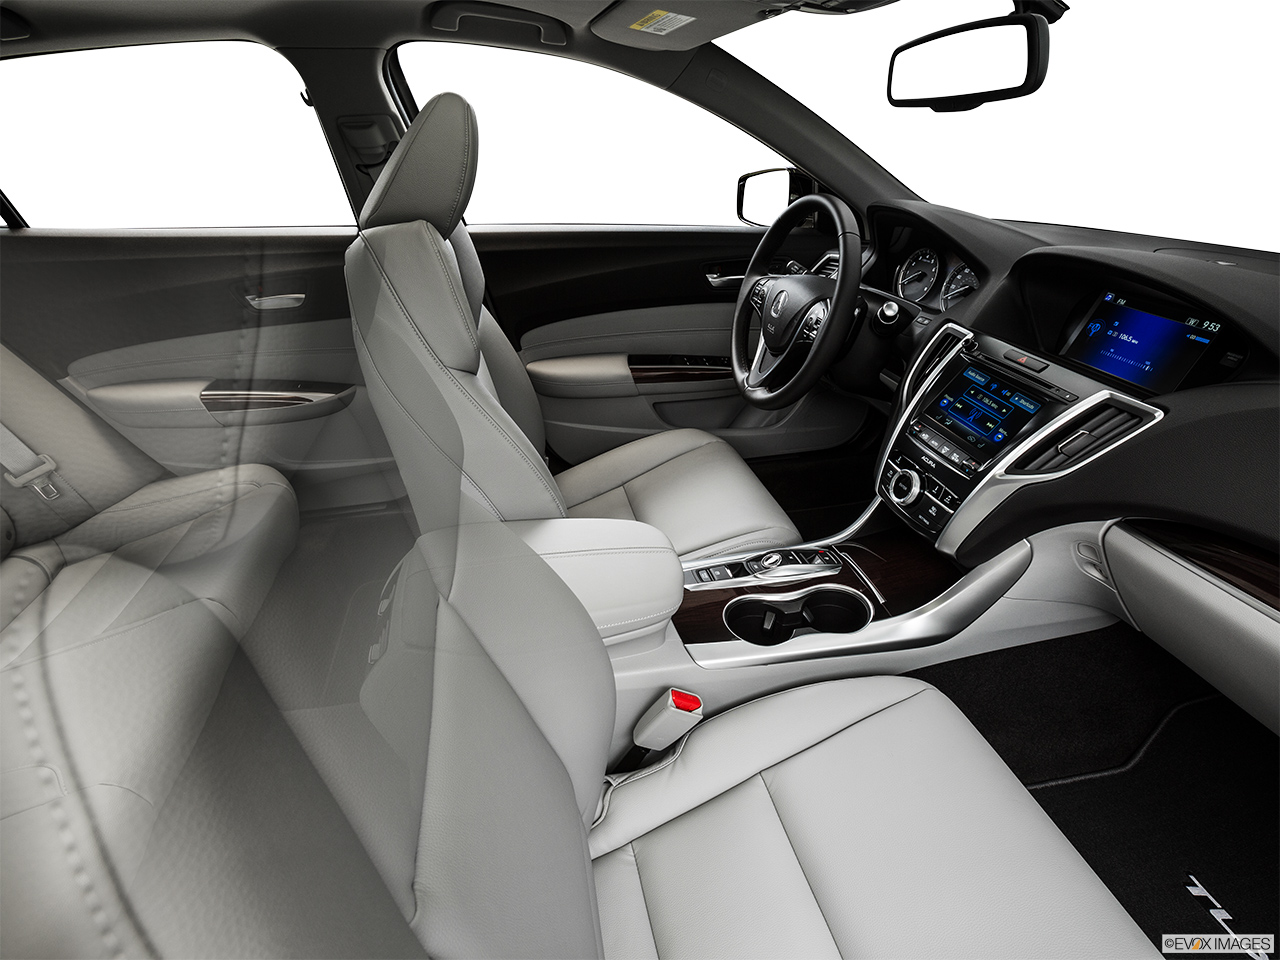 2015 Acura TLX 3.5 V-6 9-AT P-AWS Fake Buck Shot - Interior from Passenger B pillar. 